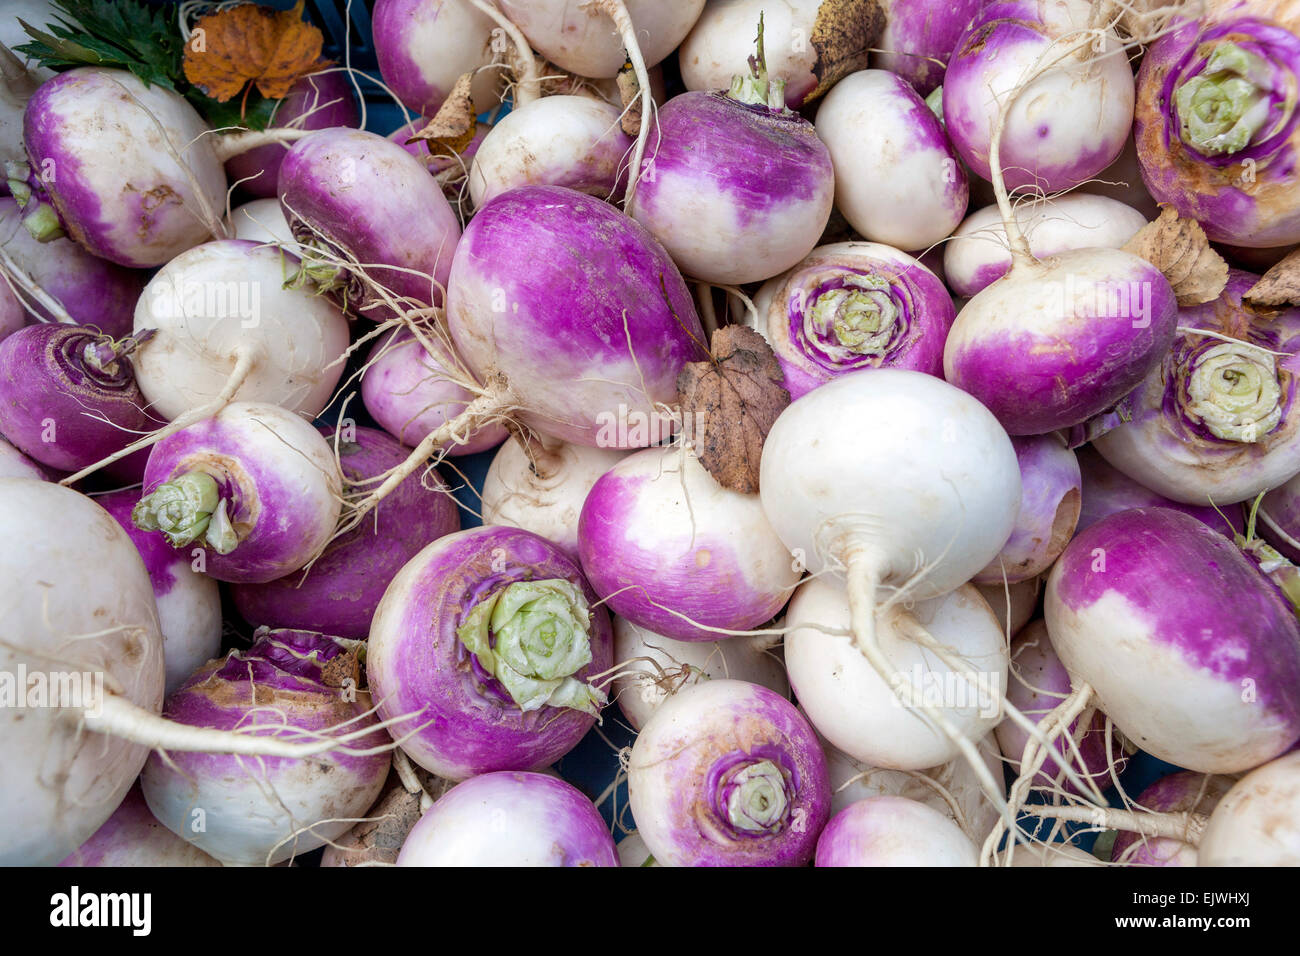 Freshly turnips roots in Local farmers market Turnip Brassica rapa subsp. rapa 'Purple Top' Stock Photo